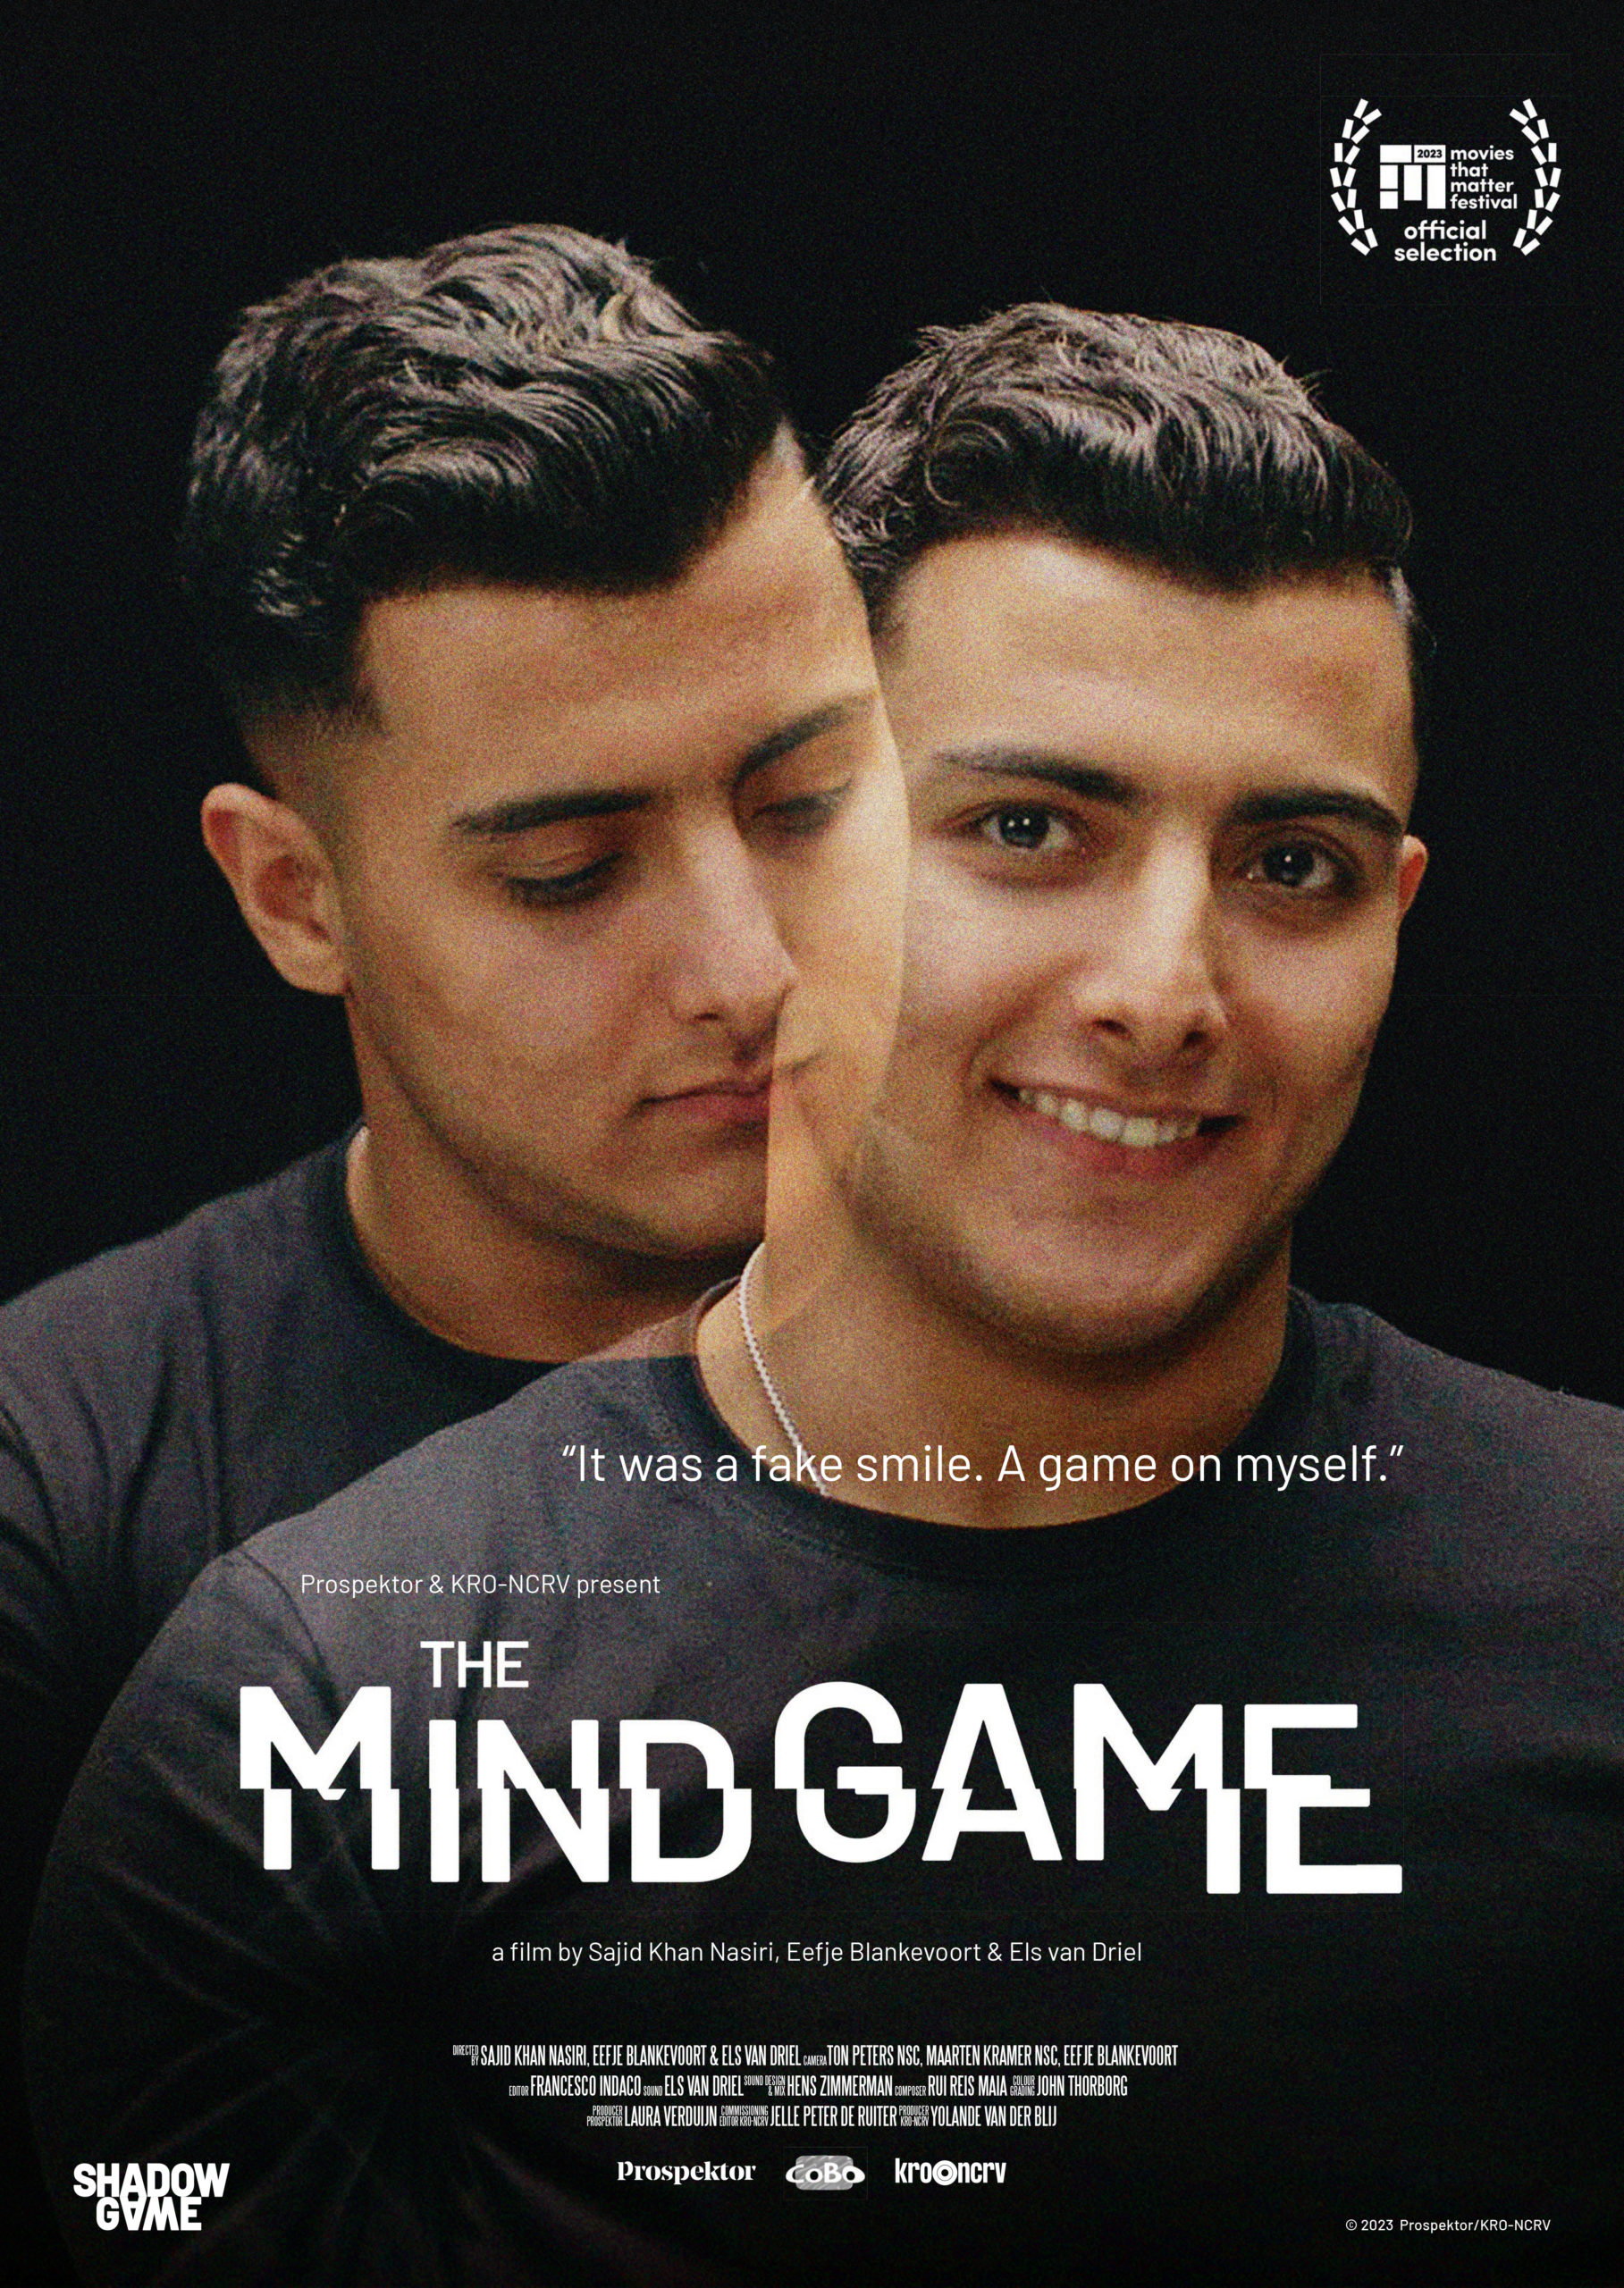 The Mind Game online UK Premiere